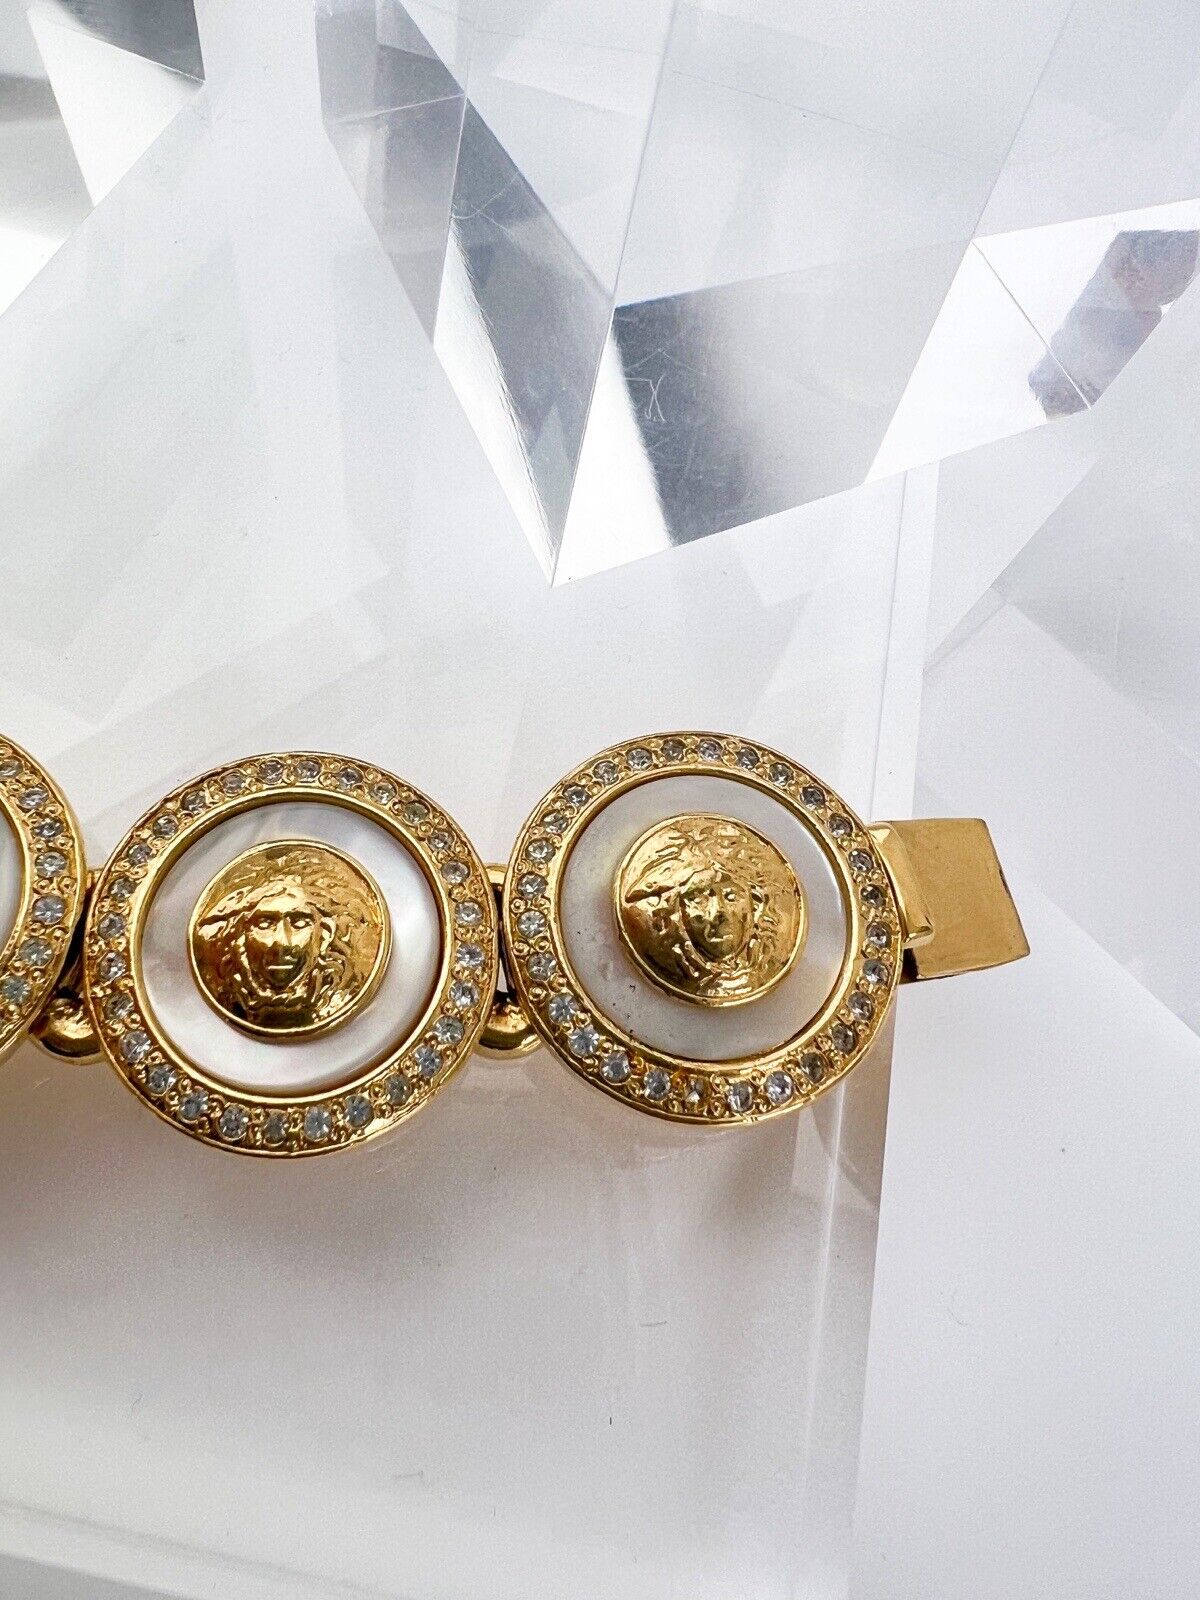  GIANNI VERSACE Vintage Charm Bracelet Medusa Head Gold Pearl 